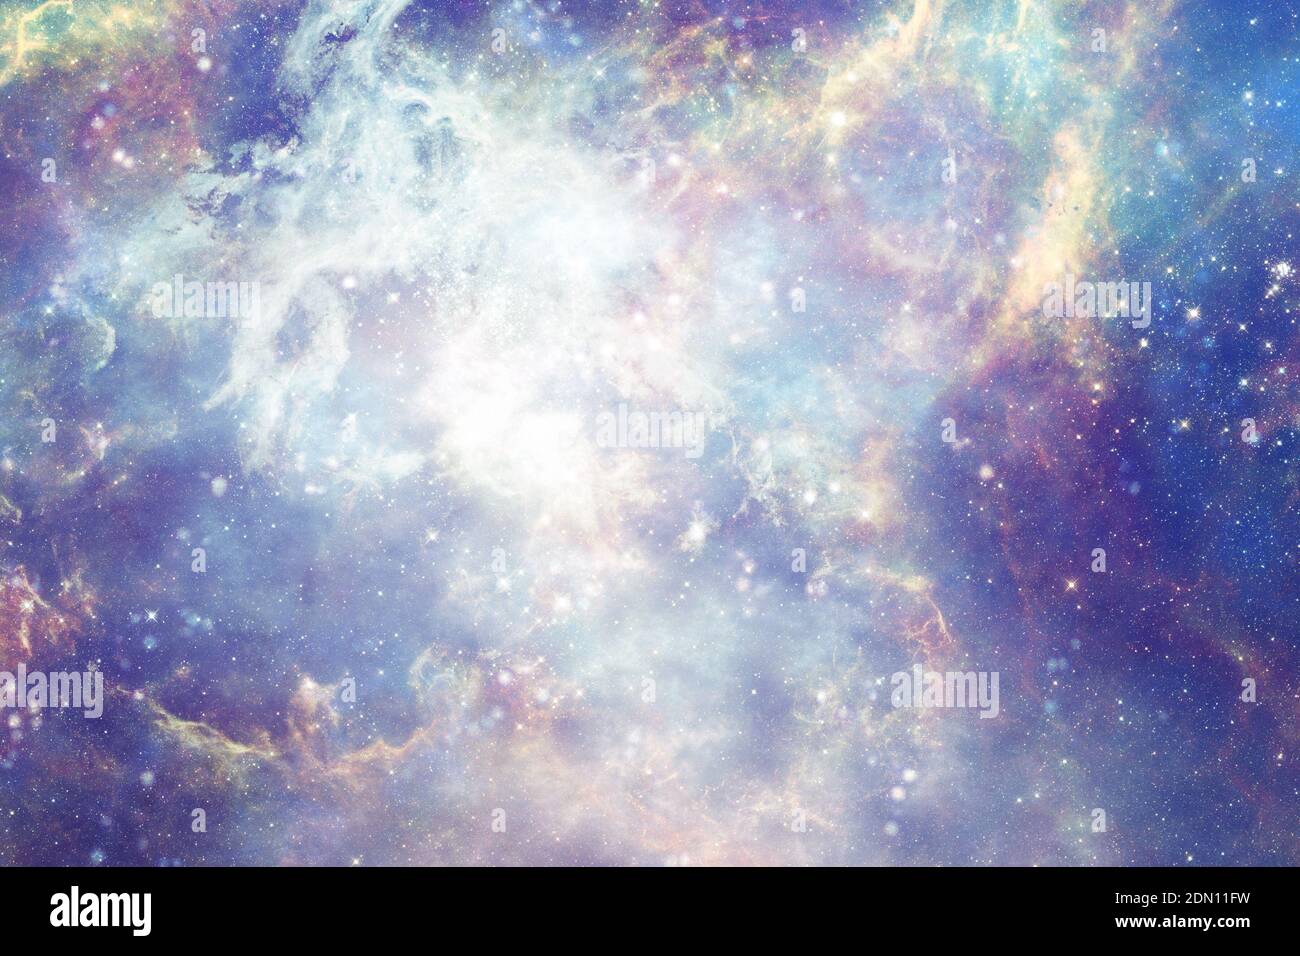 extrasolar galaxy with nebula and stars Stock Photo